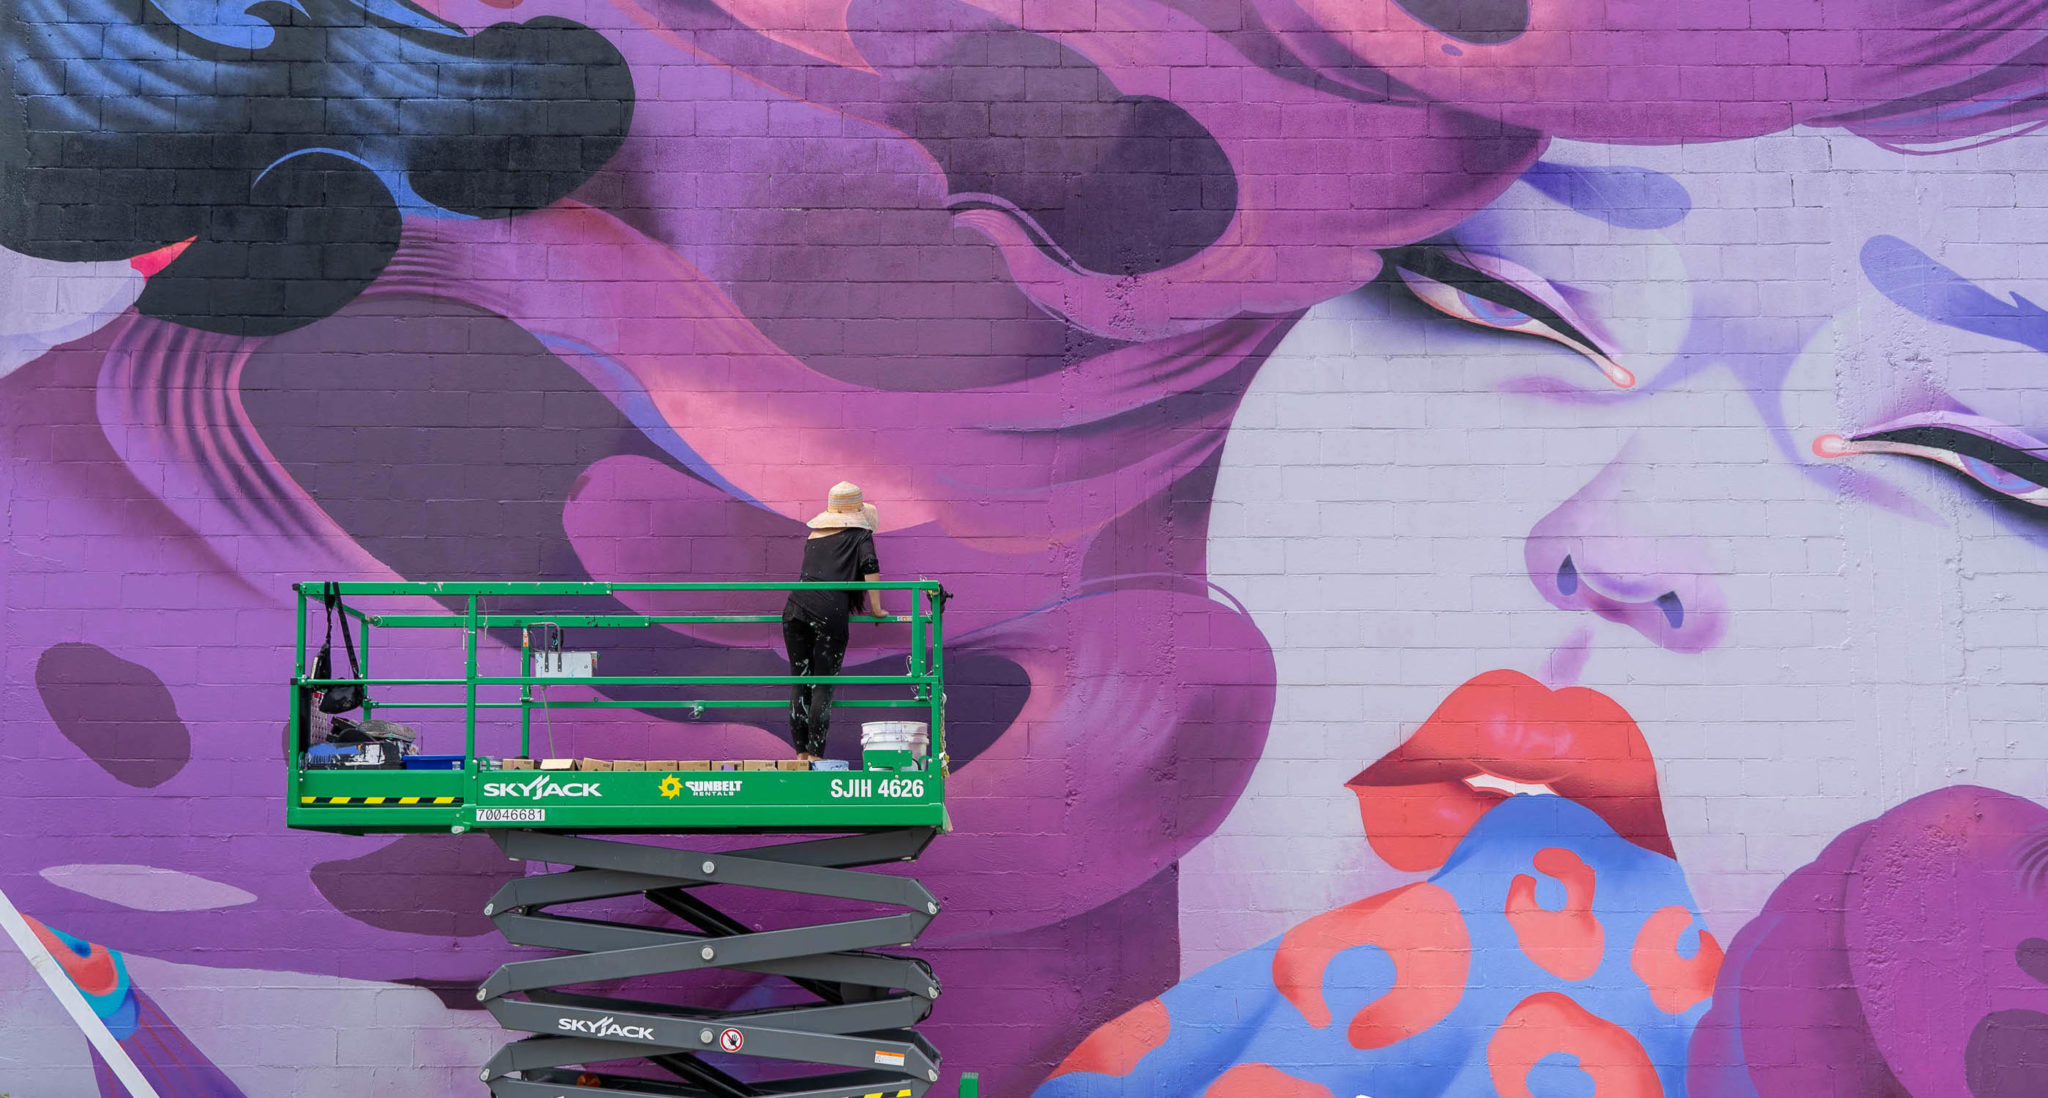 Vancouver Mural Festival Announces 60+ New Murals in 9 Neighbourhoods